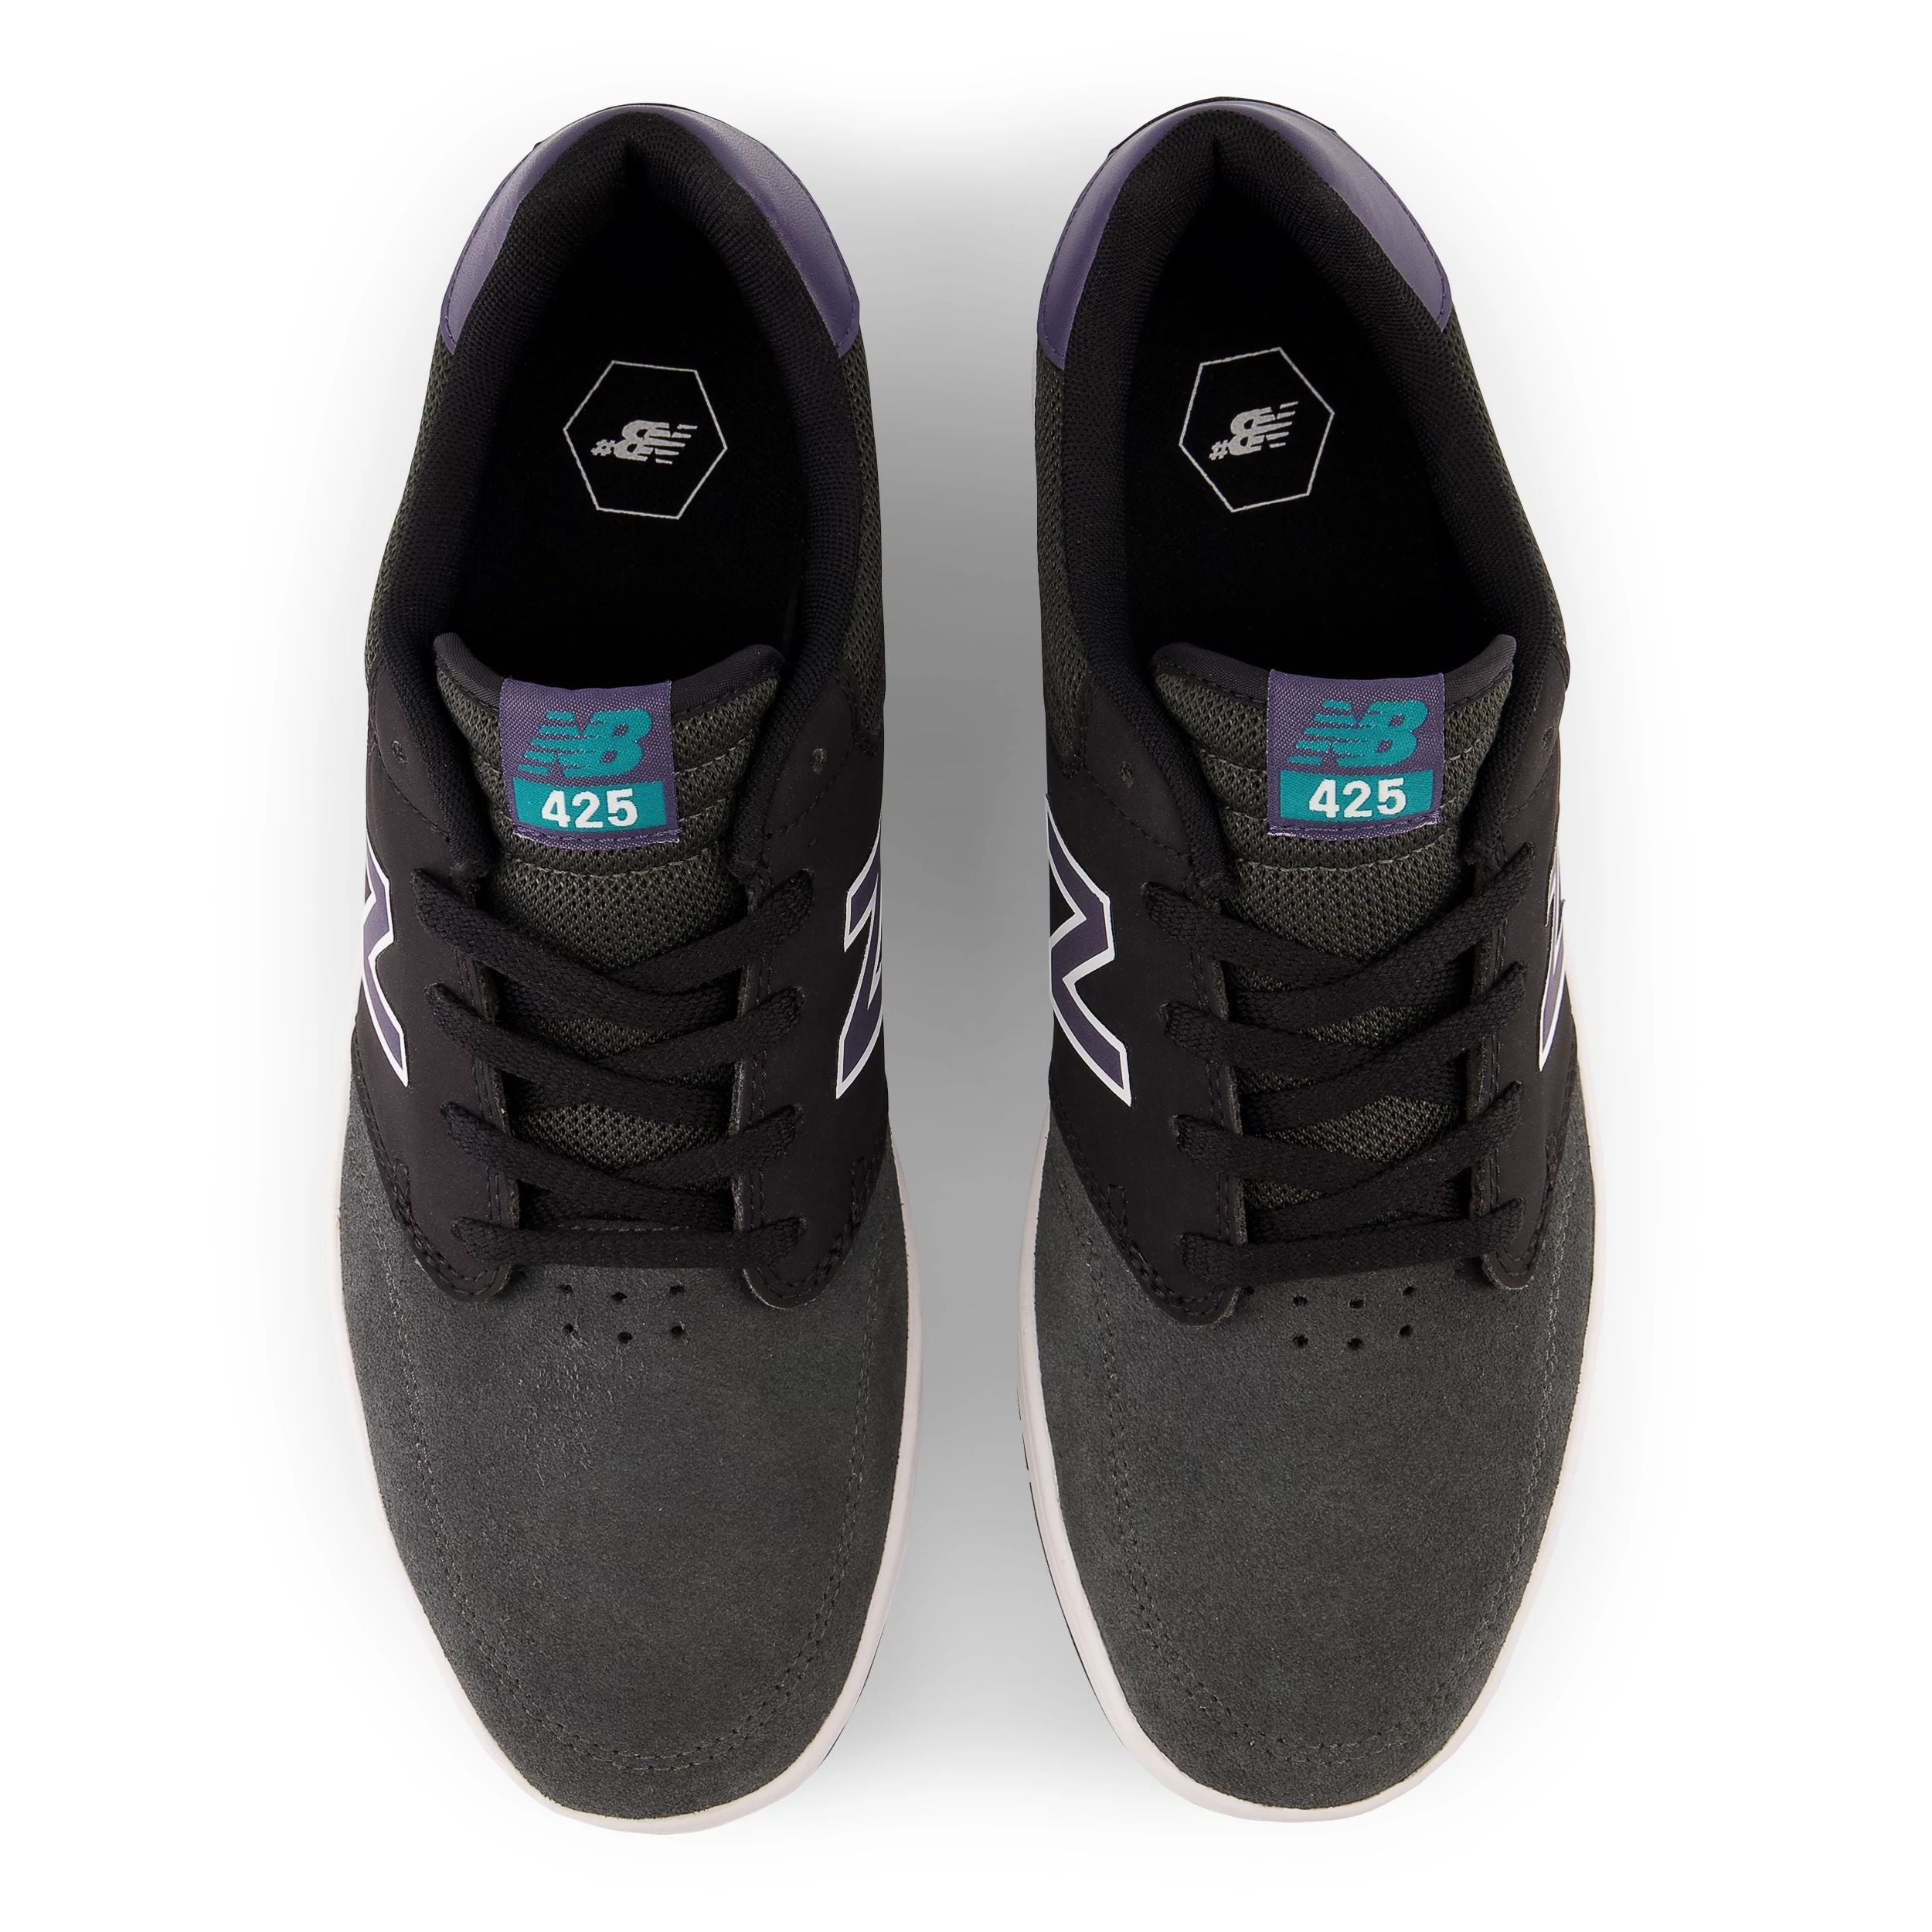 New Balance Numeric 425 Skateboard Shoe - Grey/Black